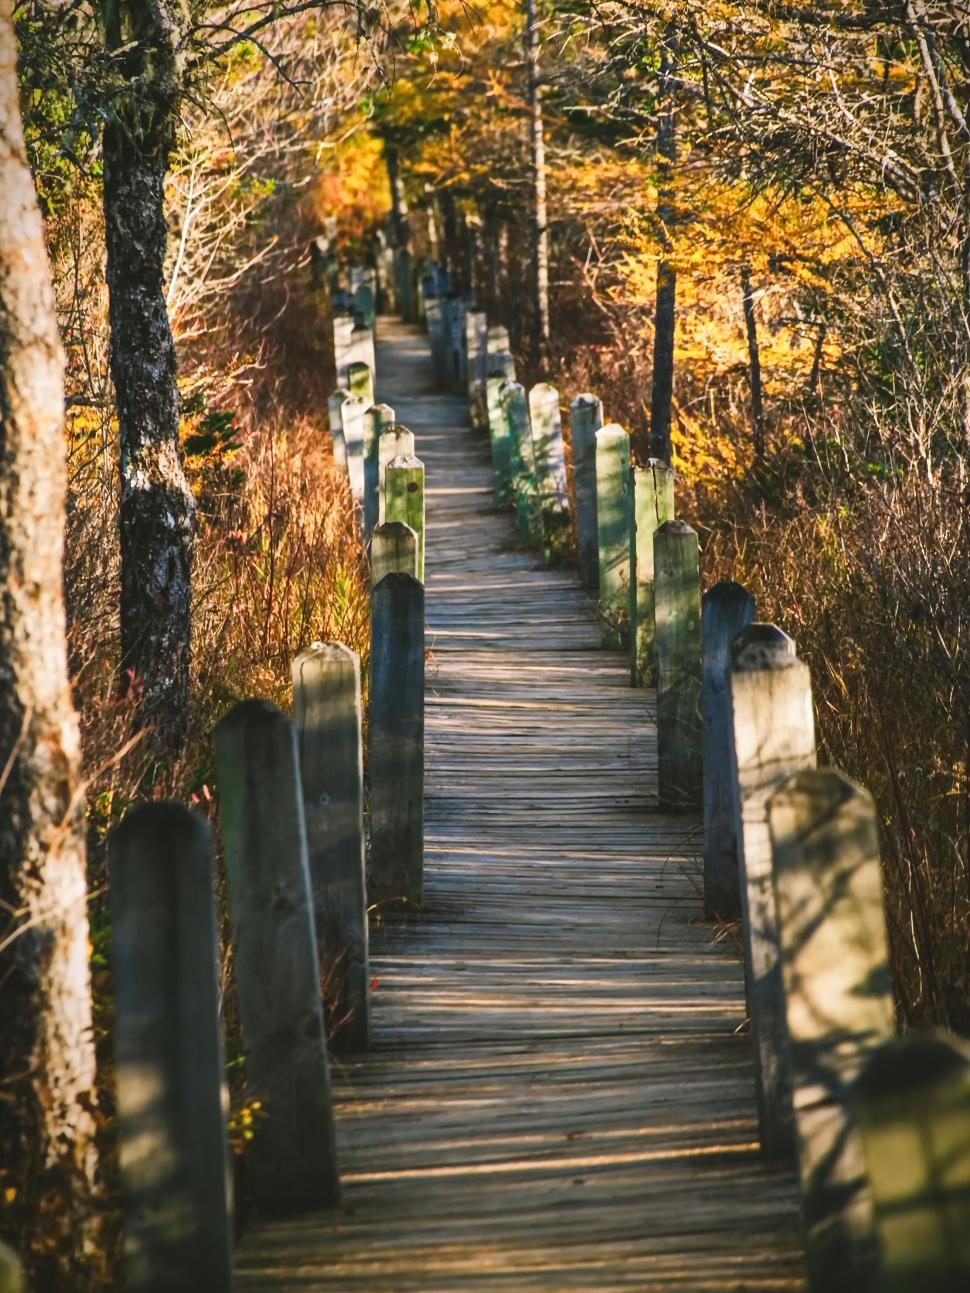 Free Image of Wooden boardwalk through autumn forest 